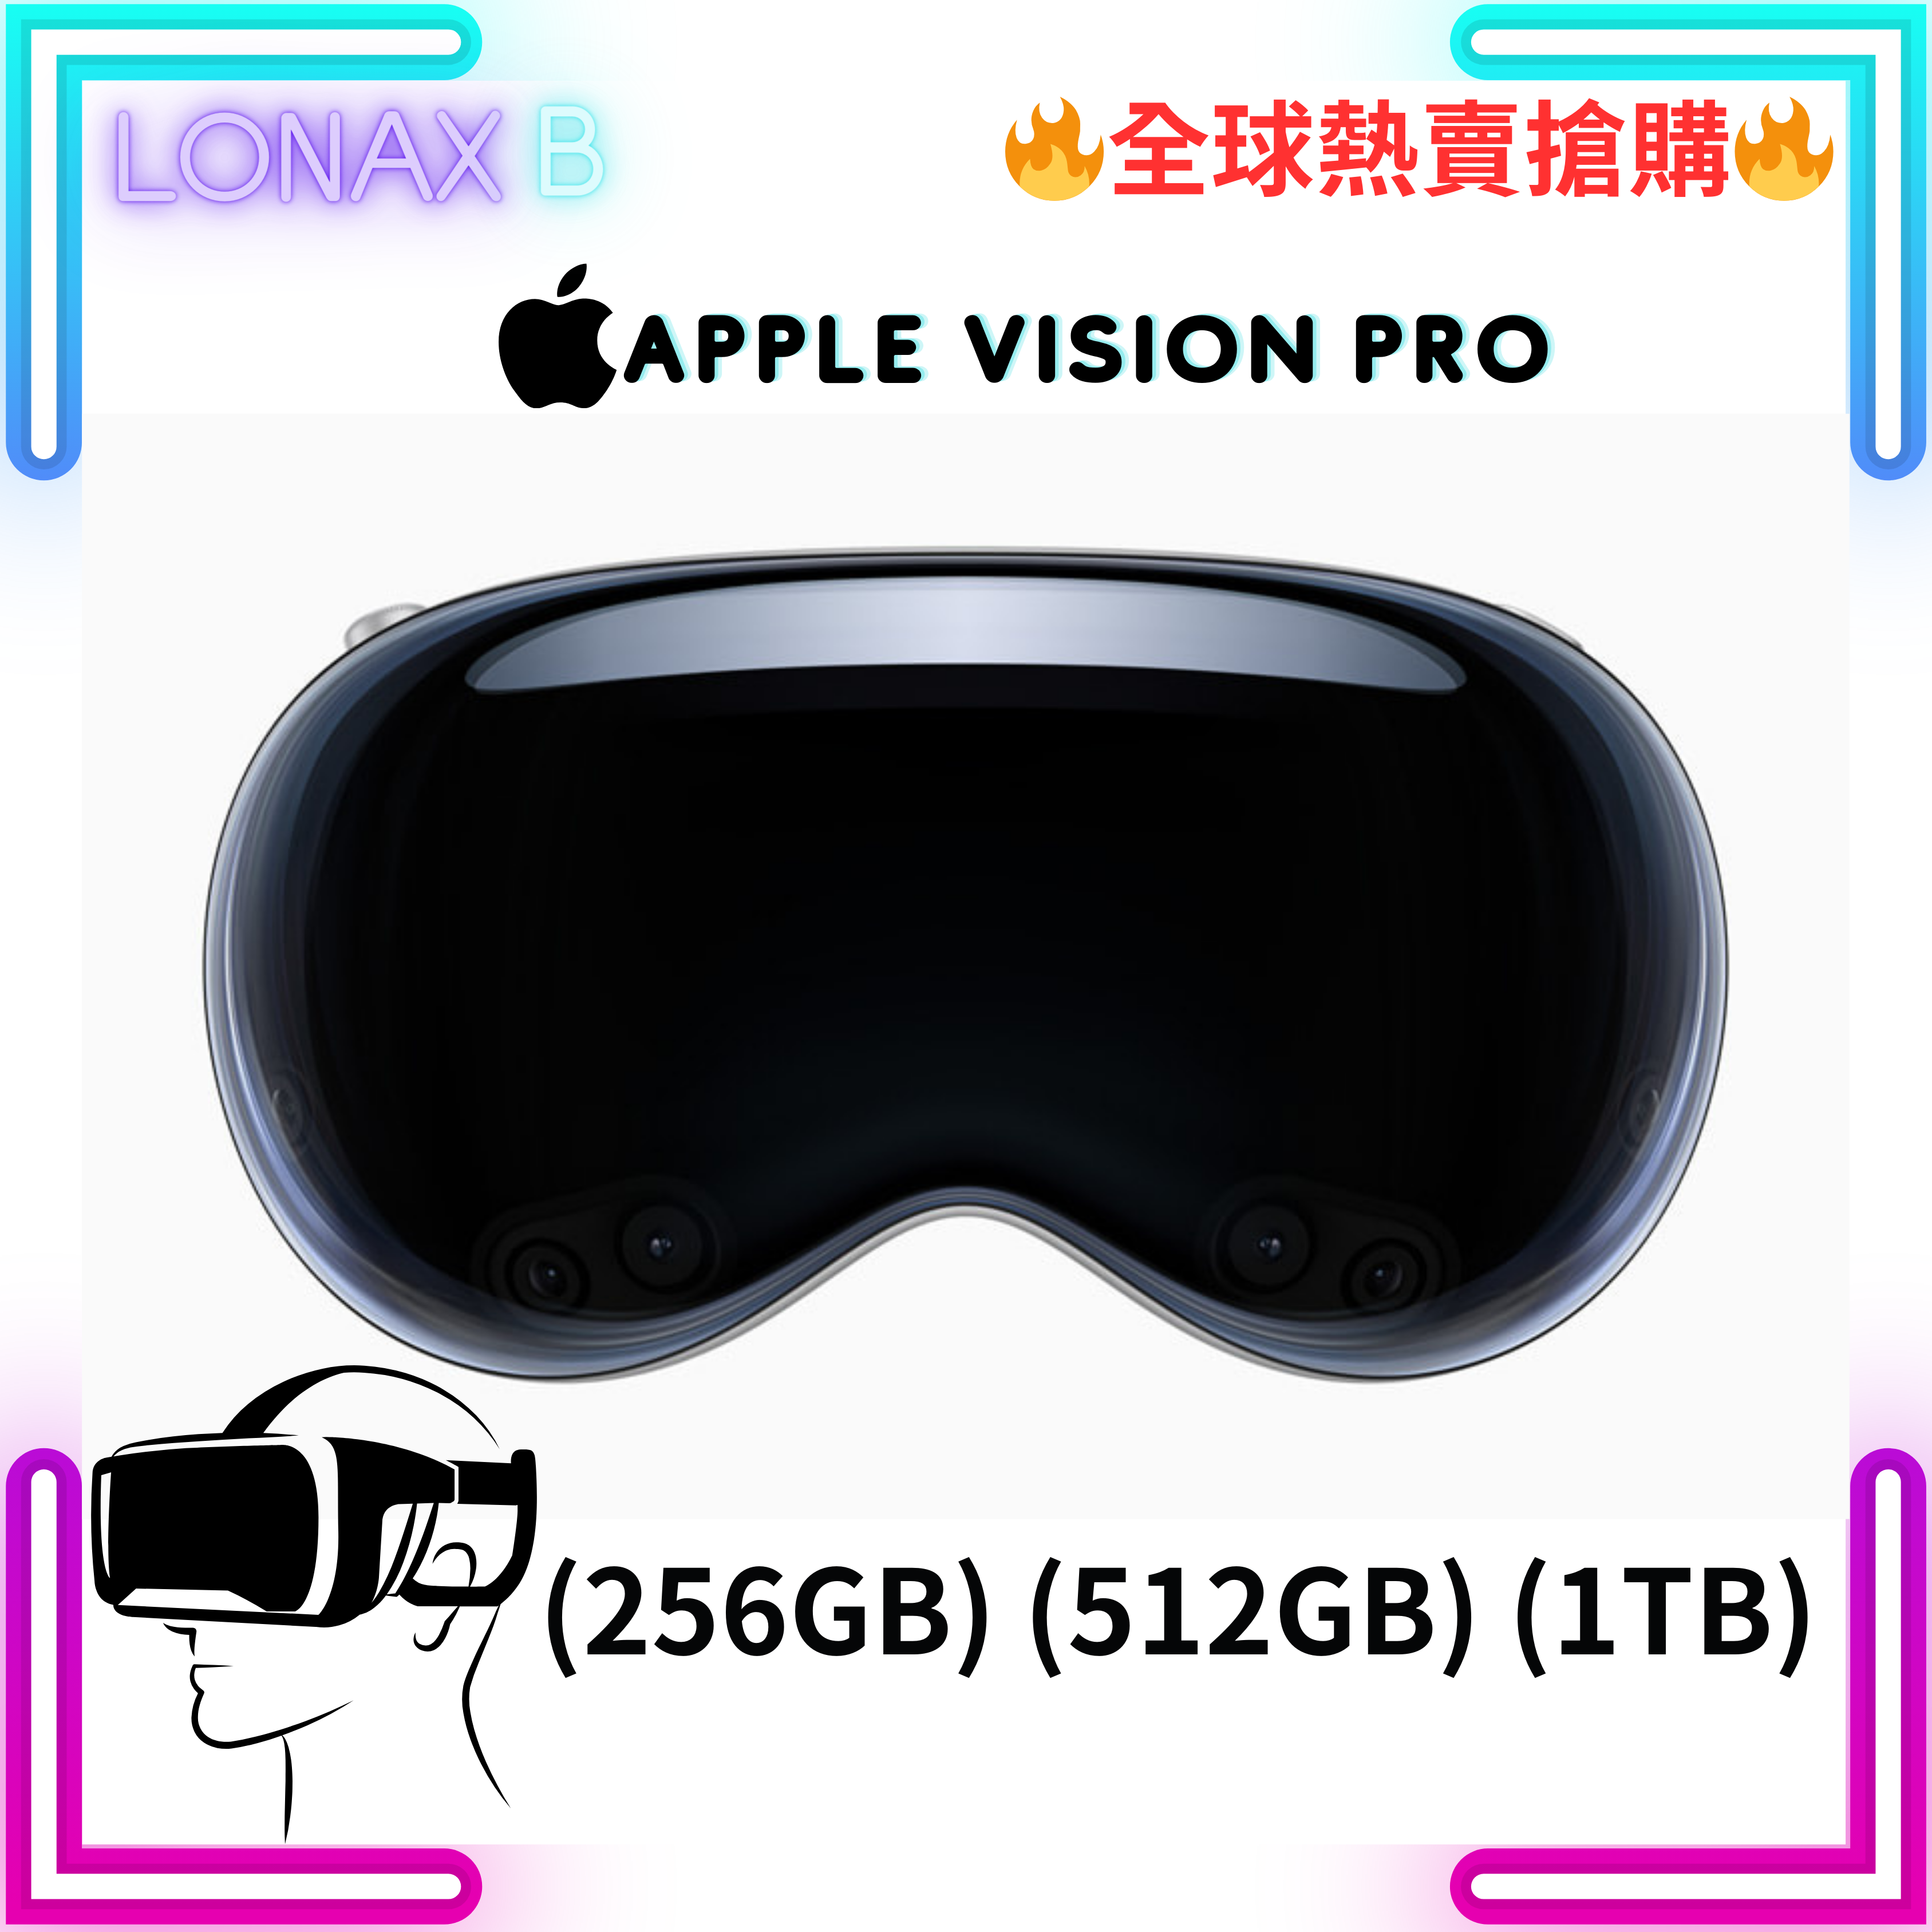 Apple Vision Pro — Apple 第一部空間運算裝置